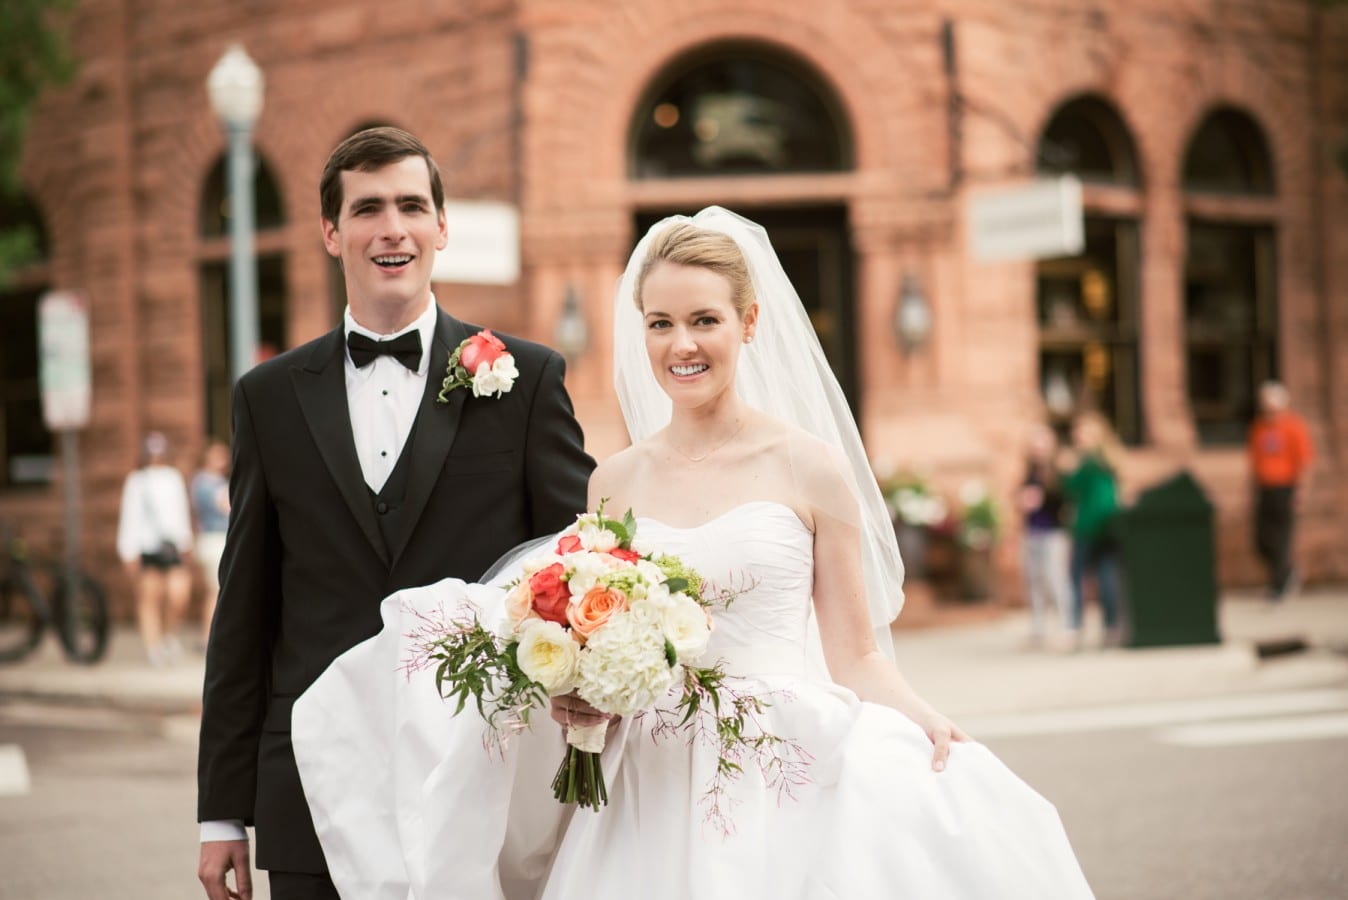 Aspen Wedding Photography | Snowmass, Colorado Wedding Photographer | From The Hip Photo